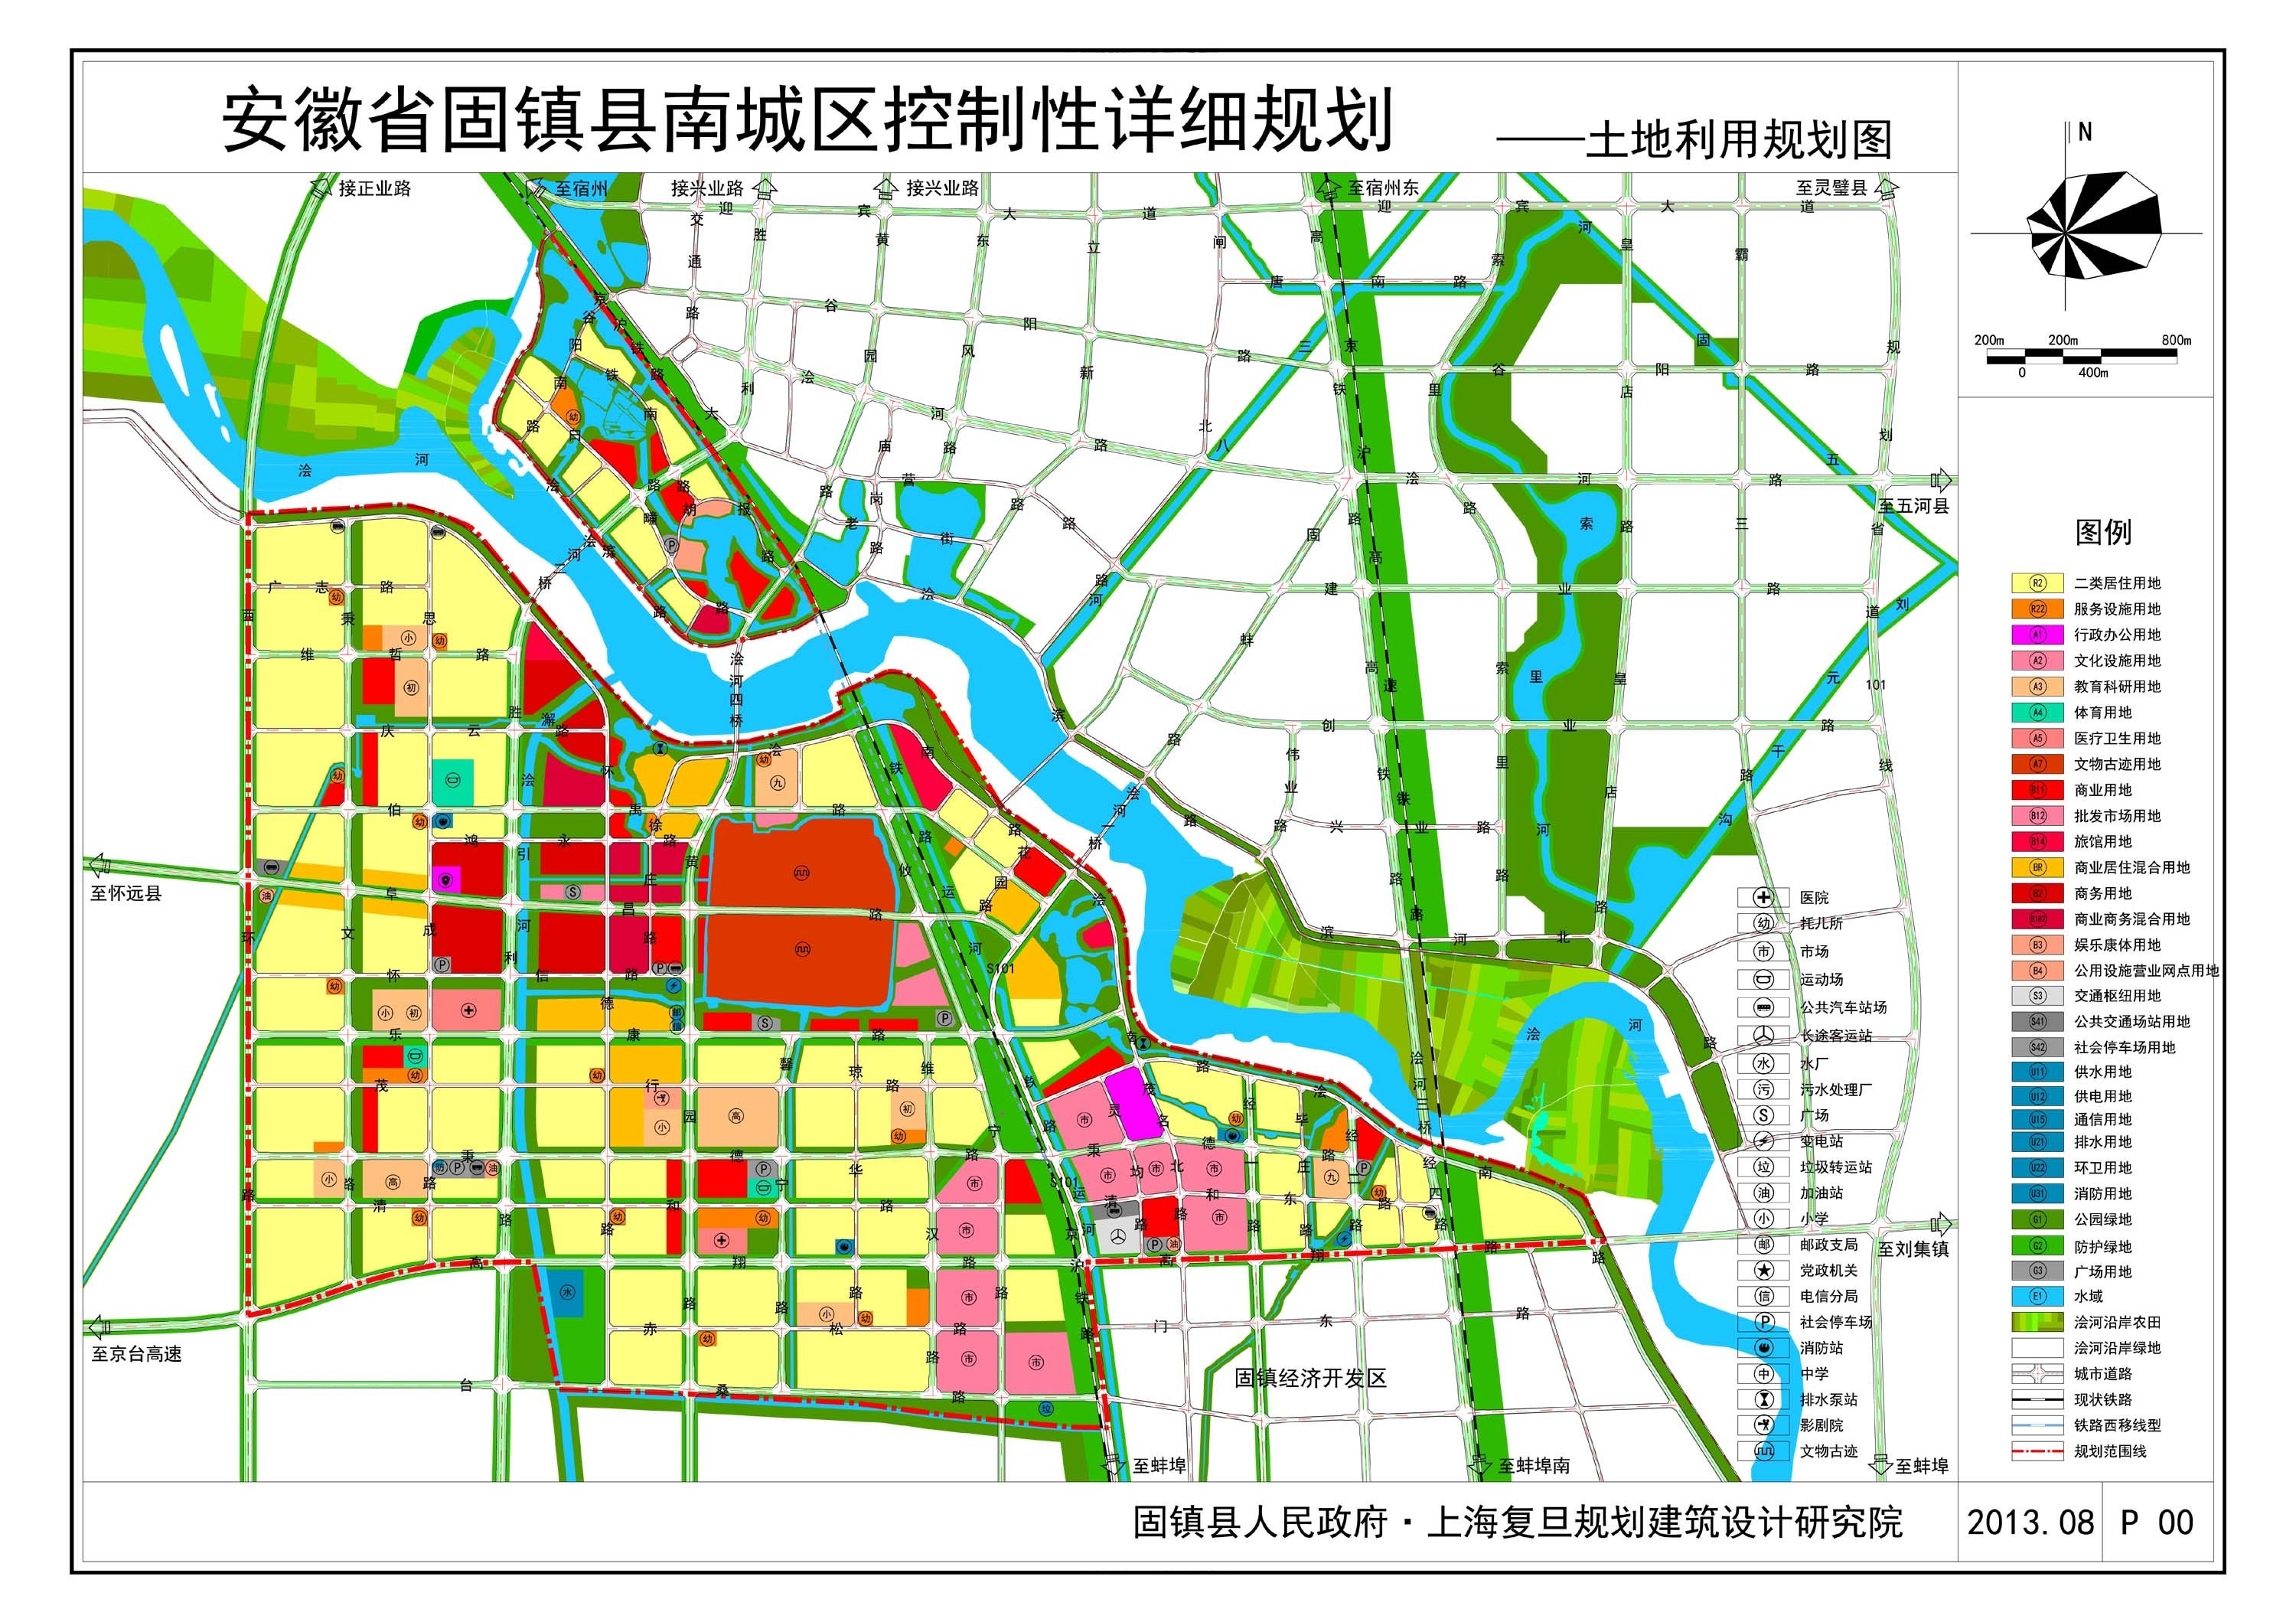 anhui guzhen south district control detail planning map huge version